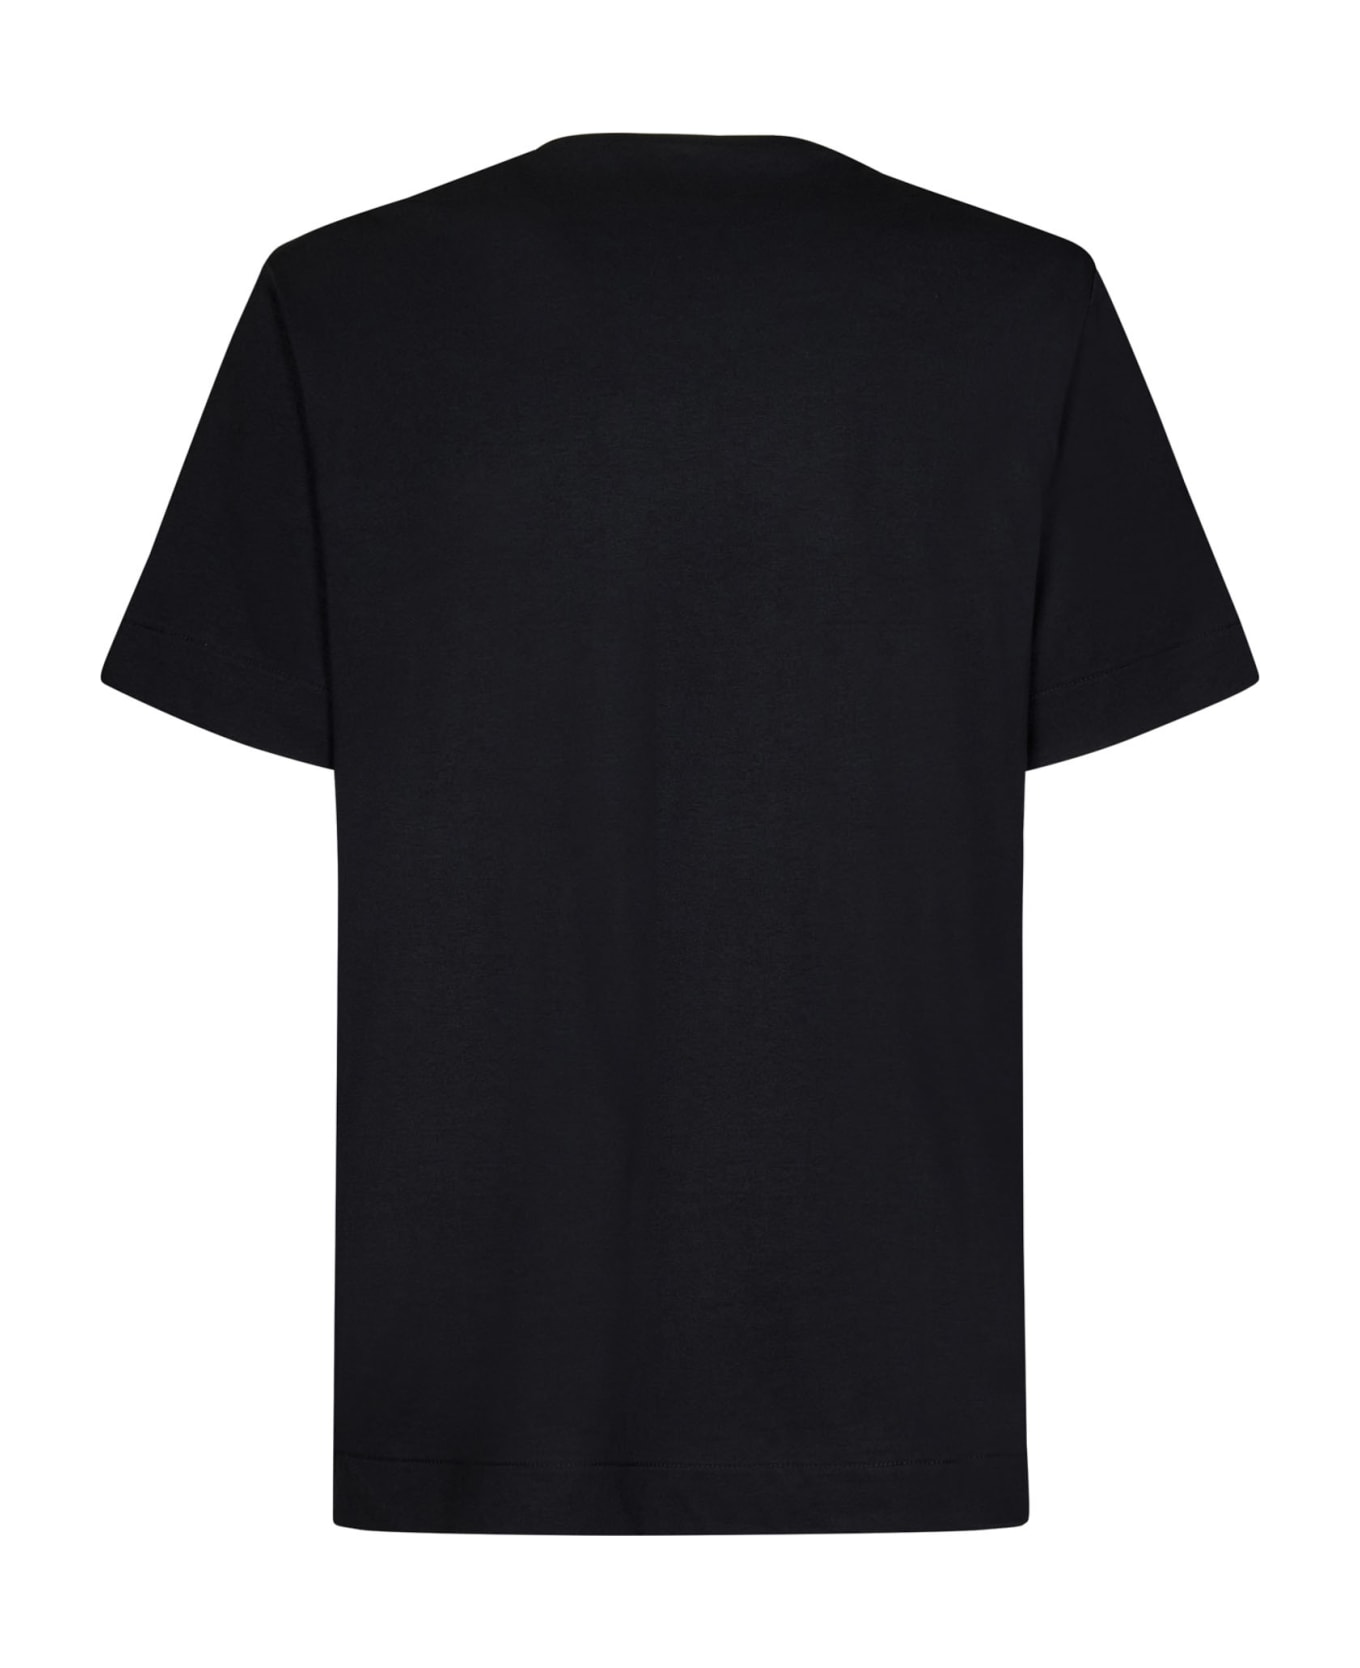 1017 ALYX 9SM Ball Chain T-shirt - BLACK